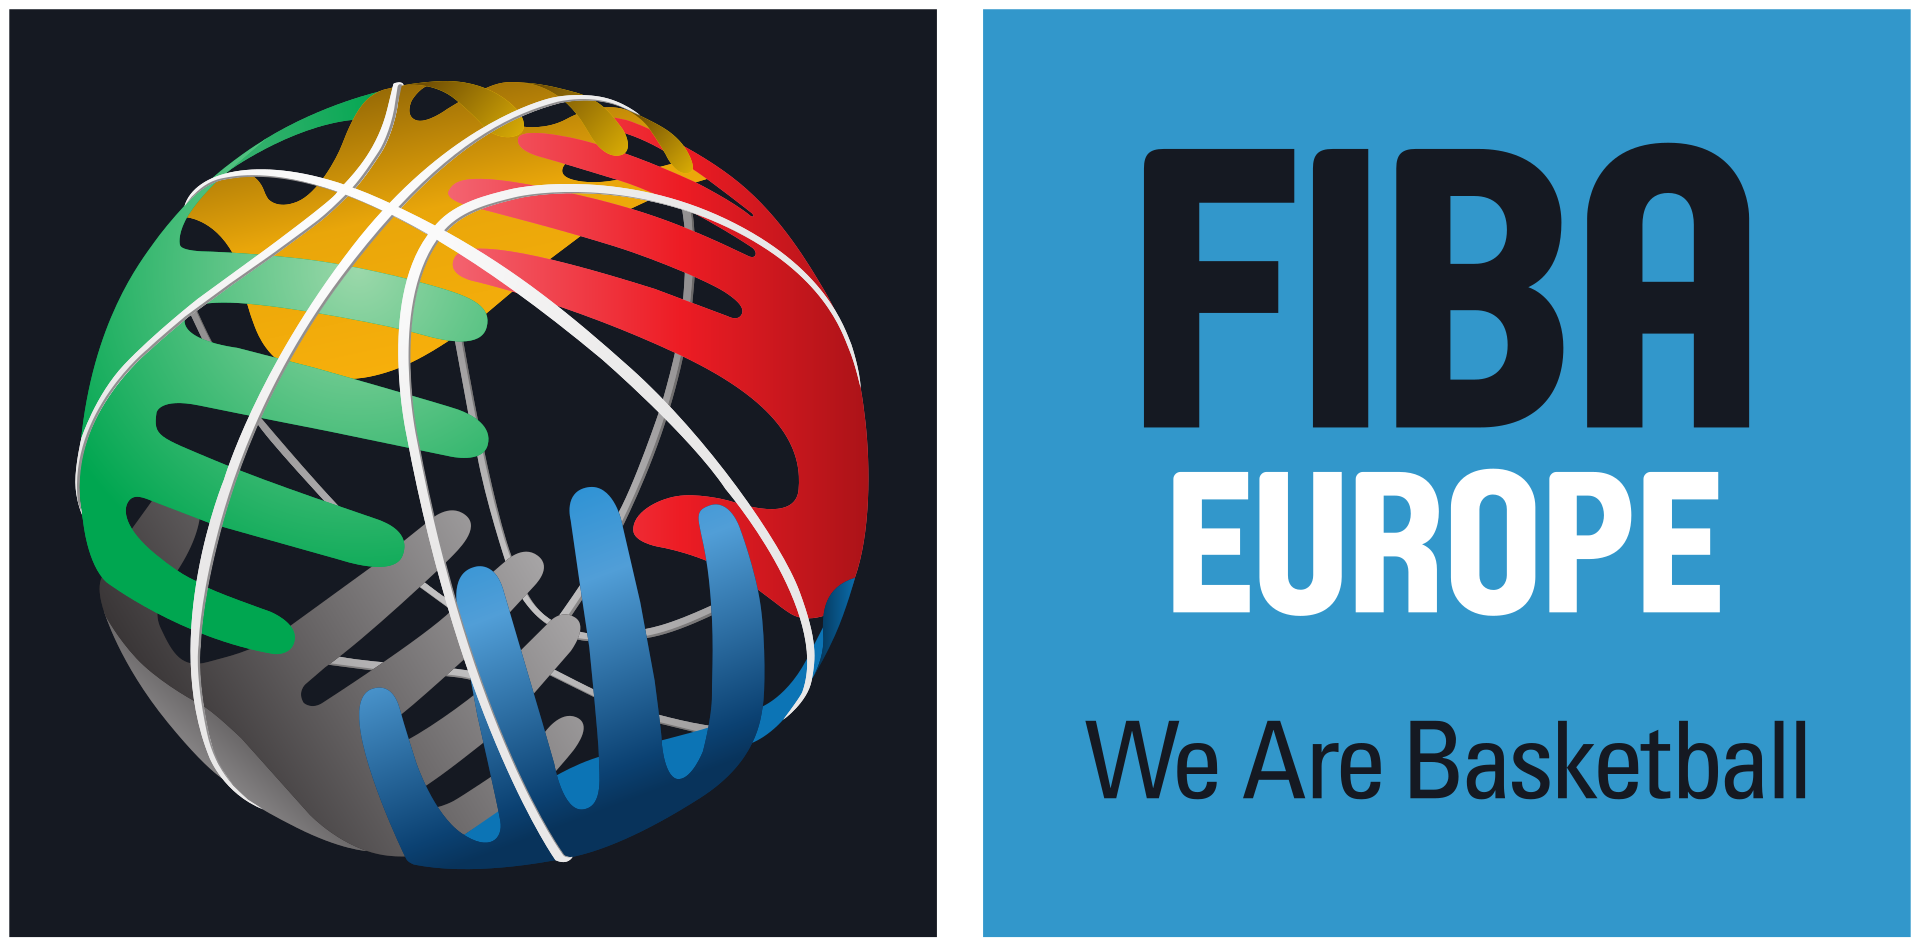 association FIBA Europe has 30 teams